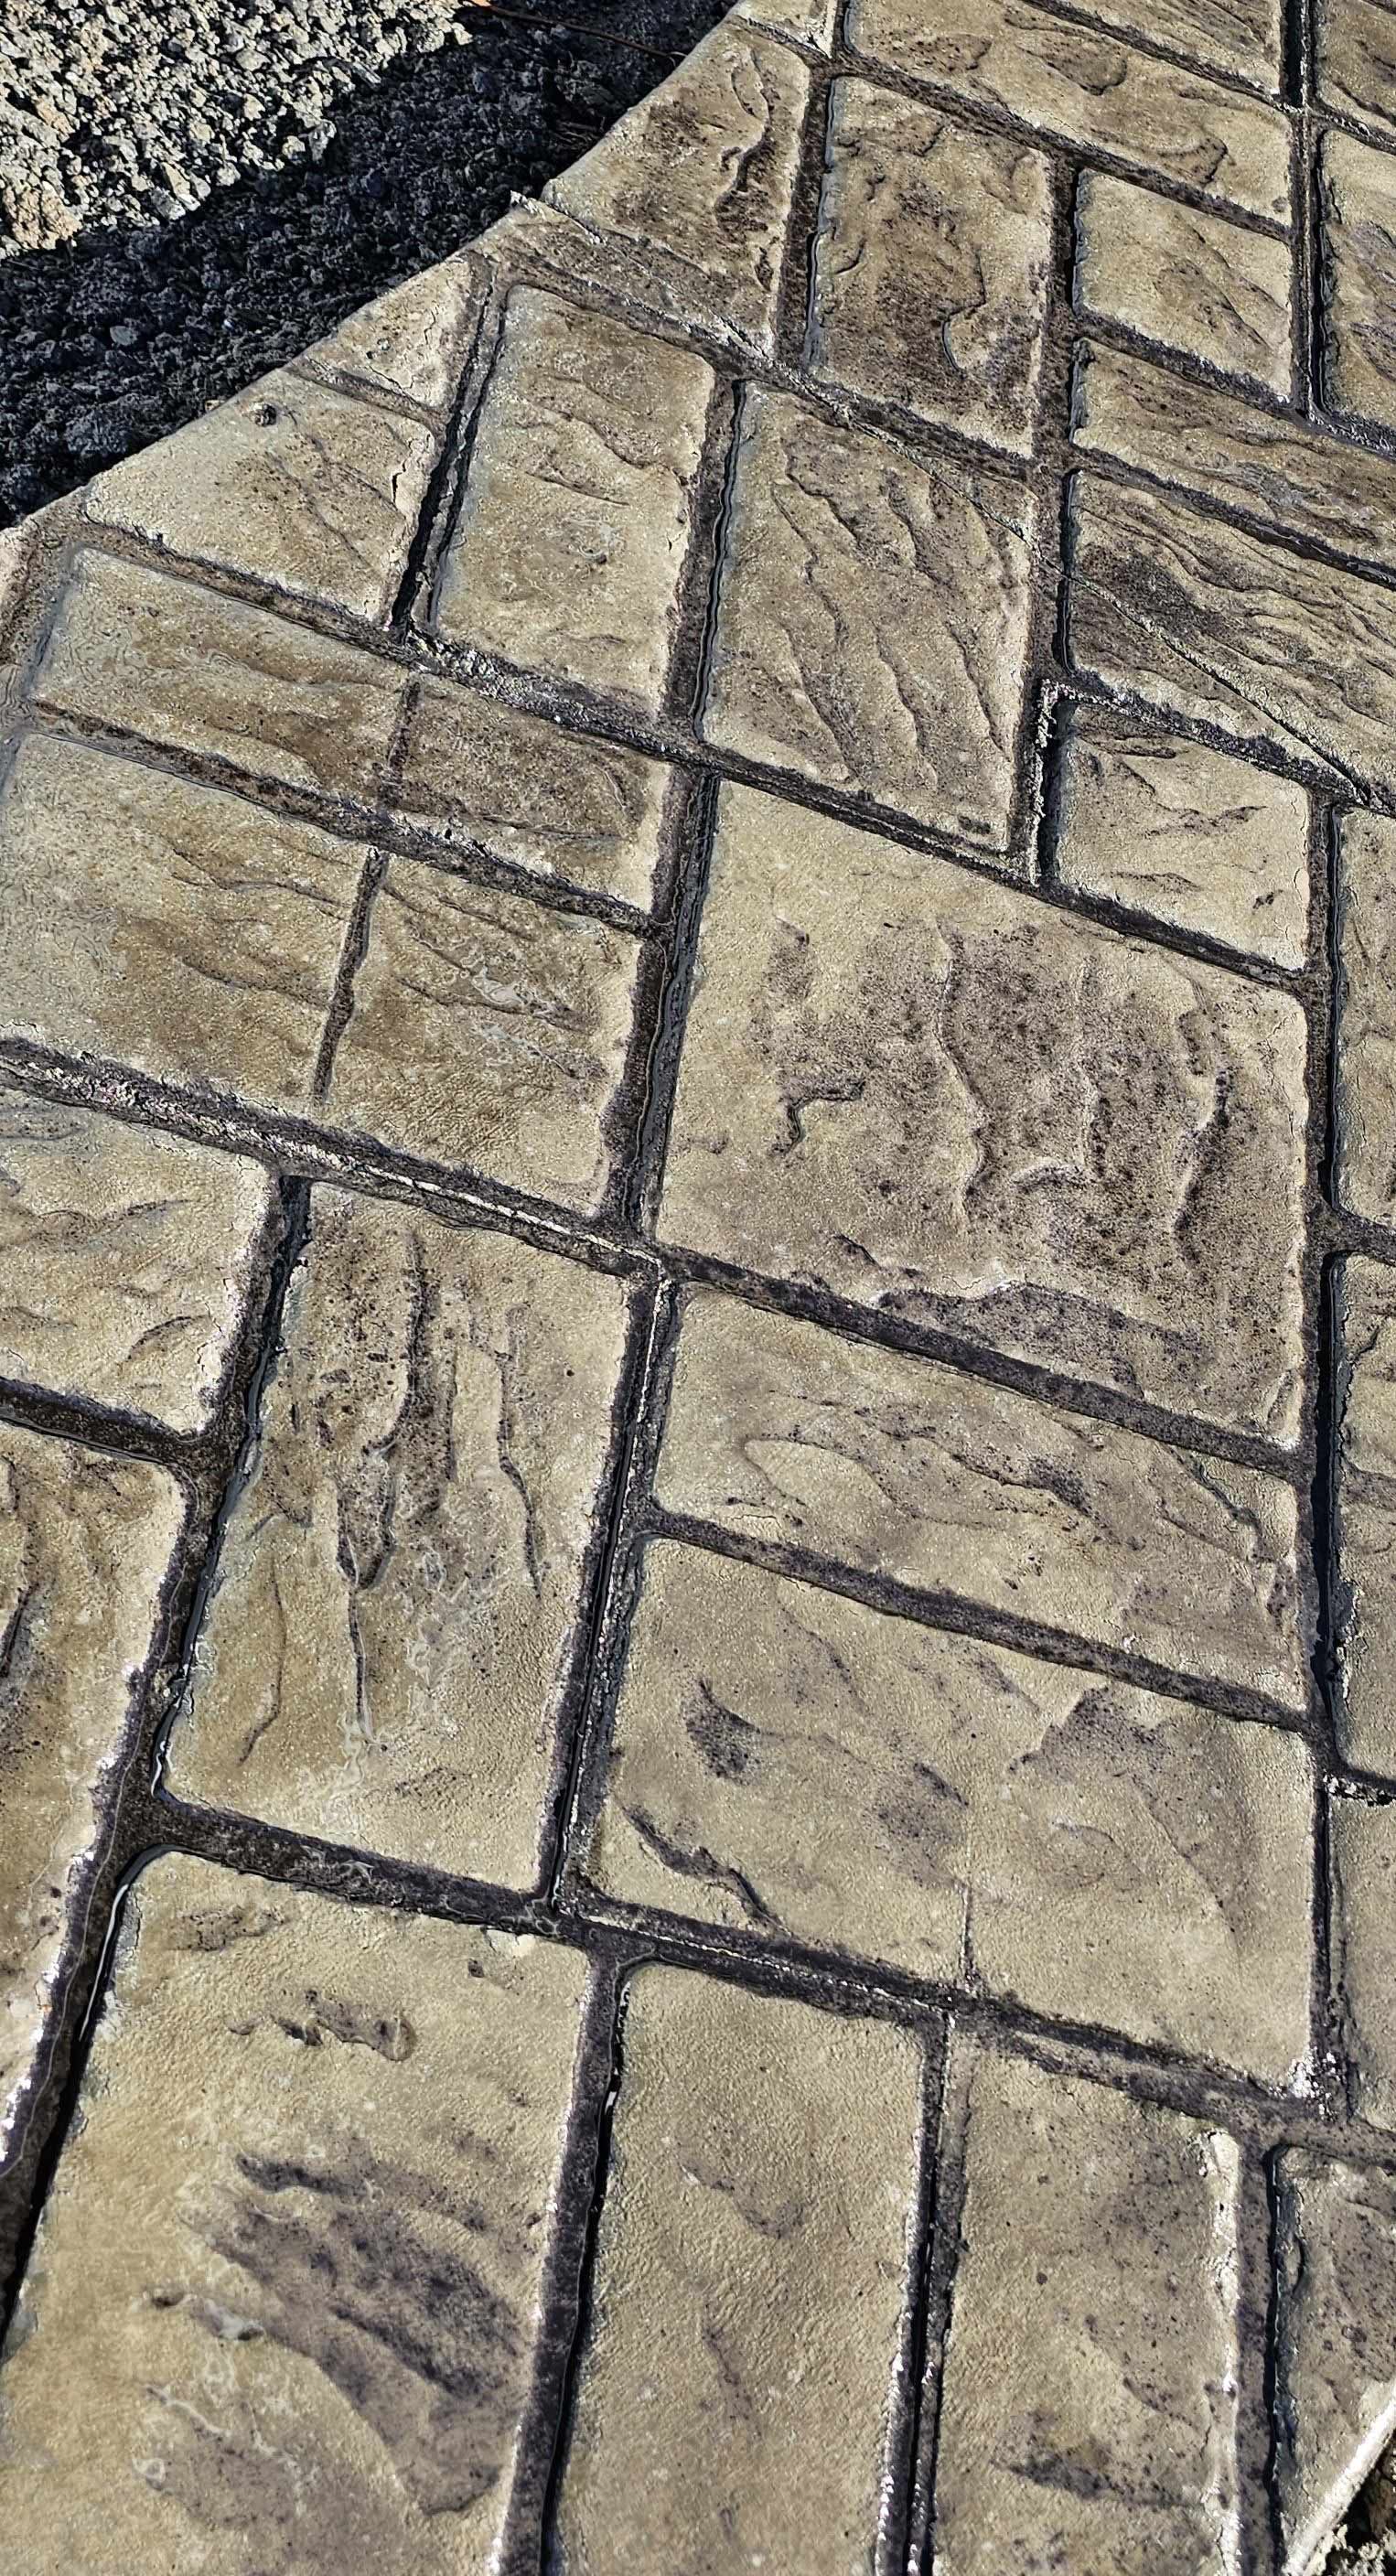 A close up of a brick floor with a black border.